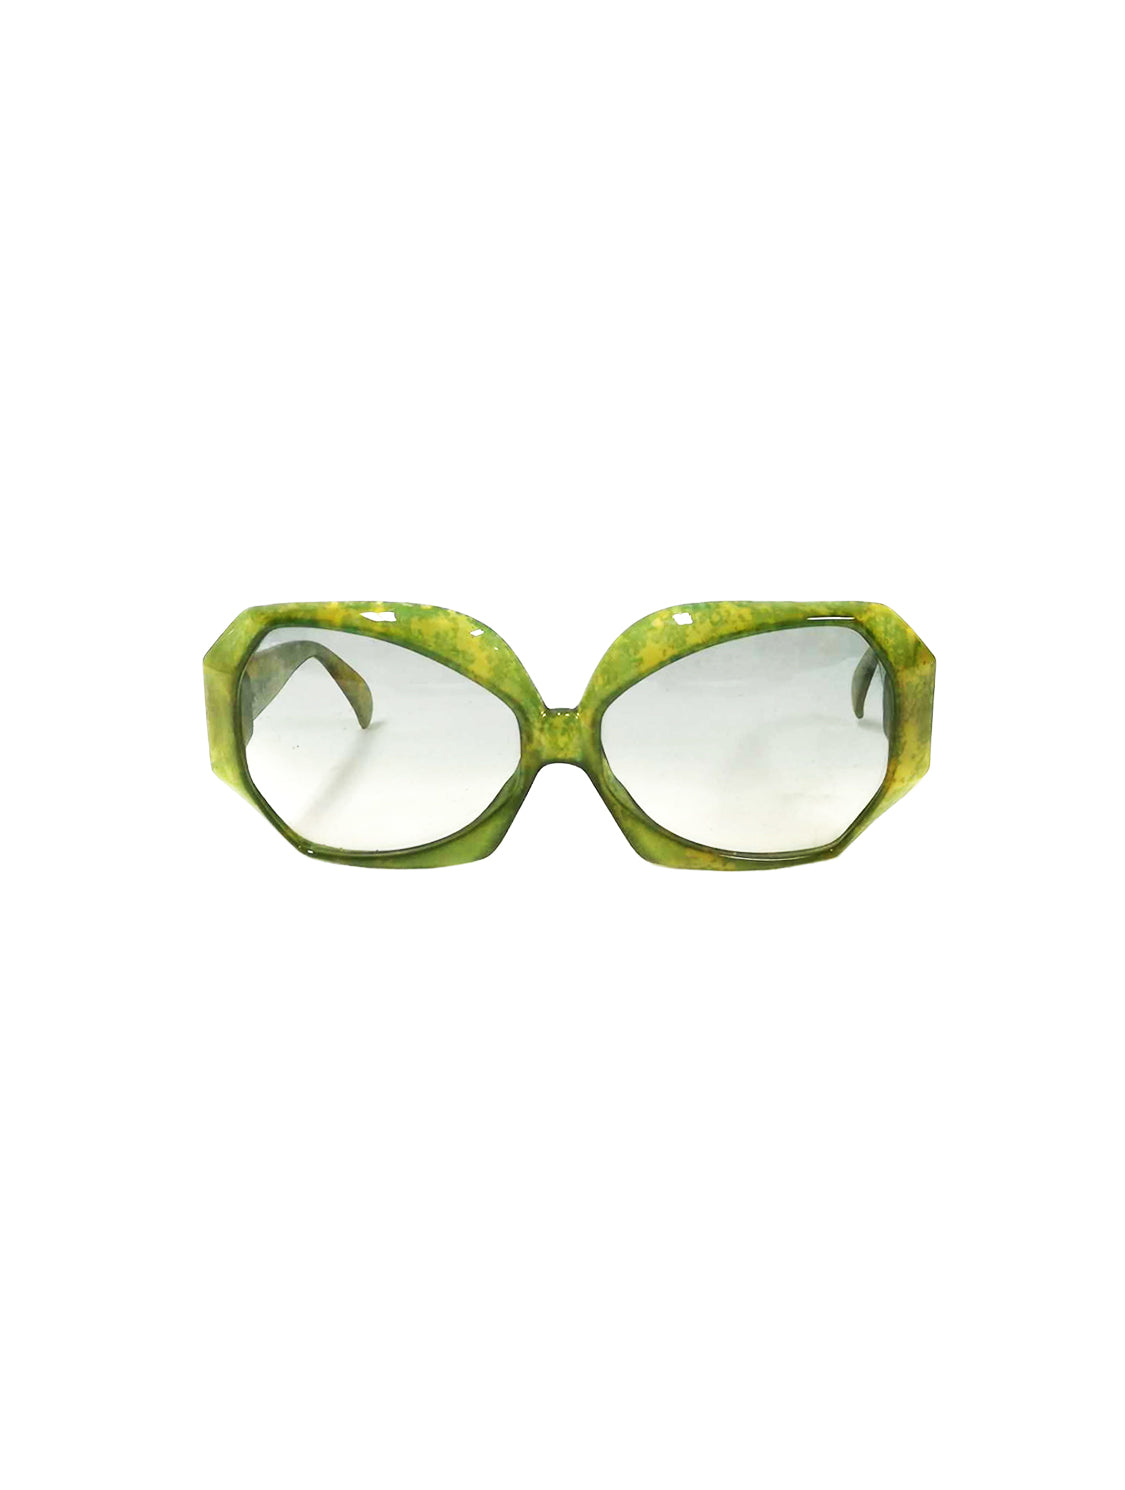 Christian Dior x Optyl 2000s Green Sunglasses